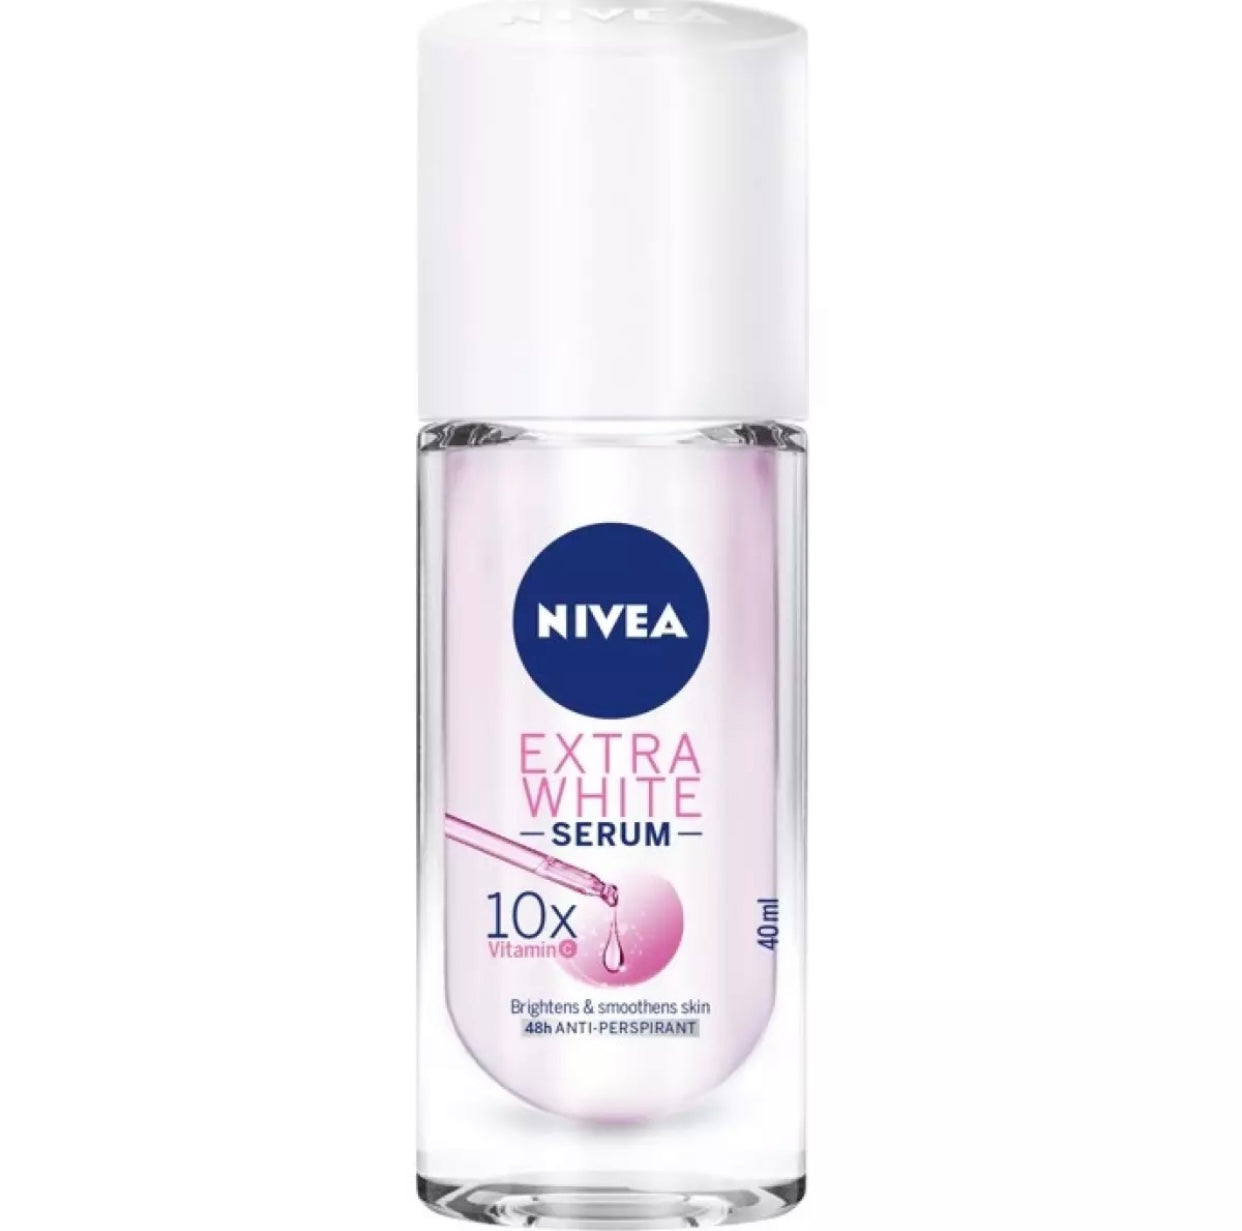 Nivea Extra White Serum 10X Vitamin C - Anti-Perspirant Deodorant 40ml